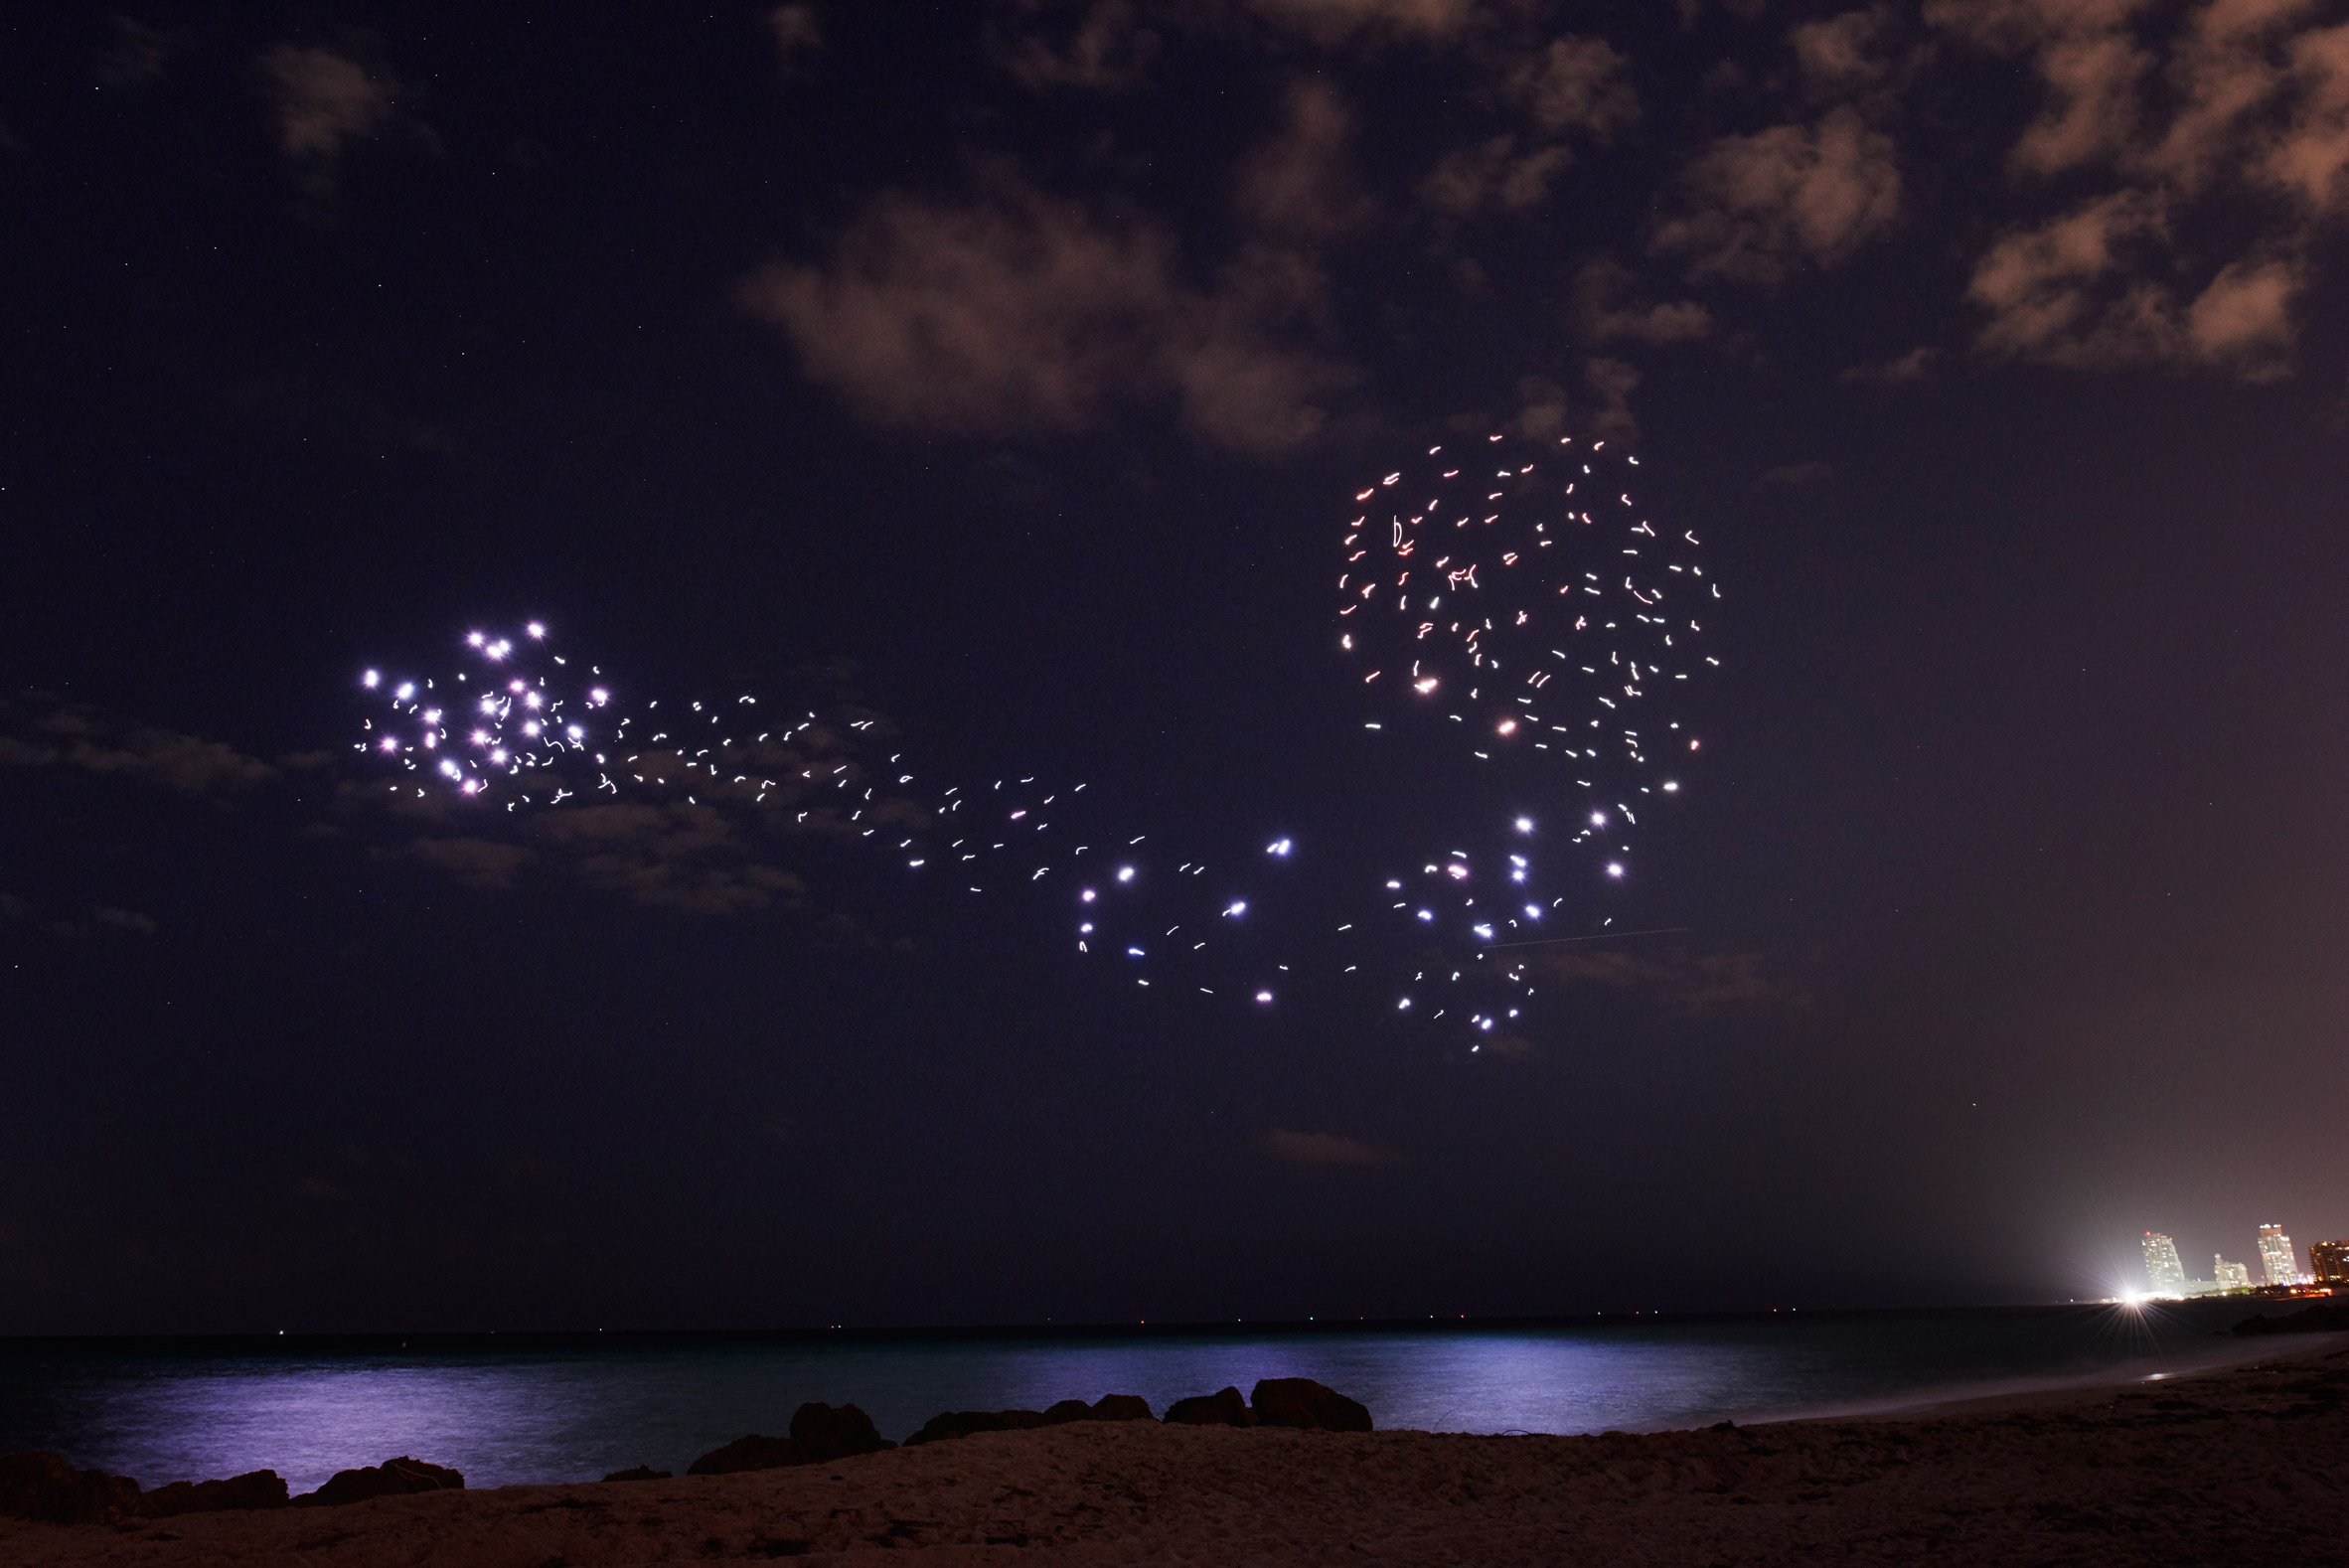 Studio Drift's swarm of drones illuminates Miami Beach